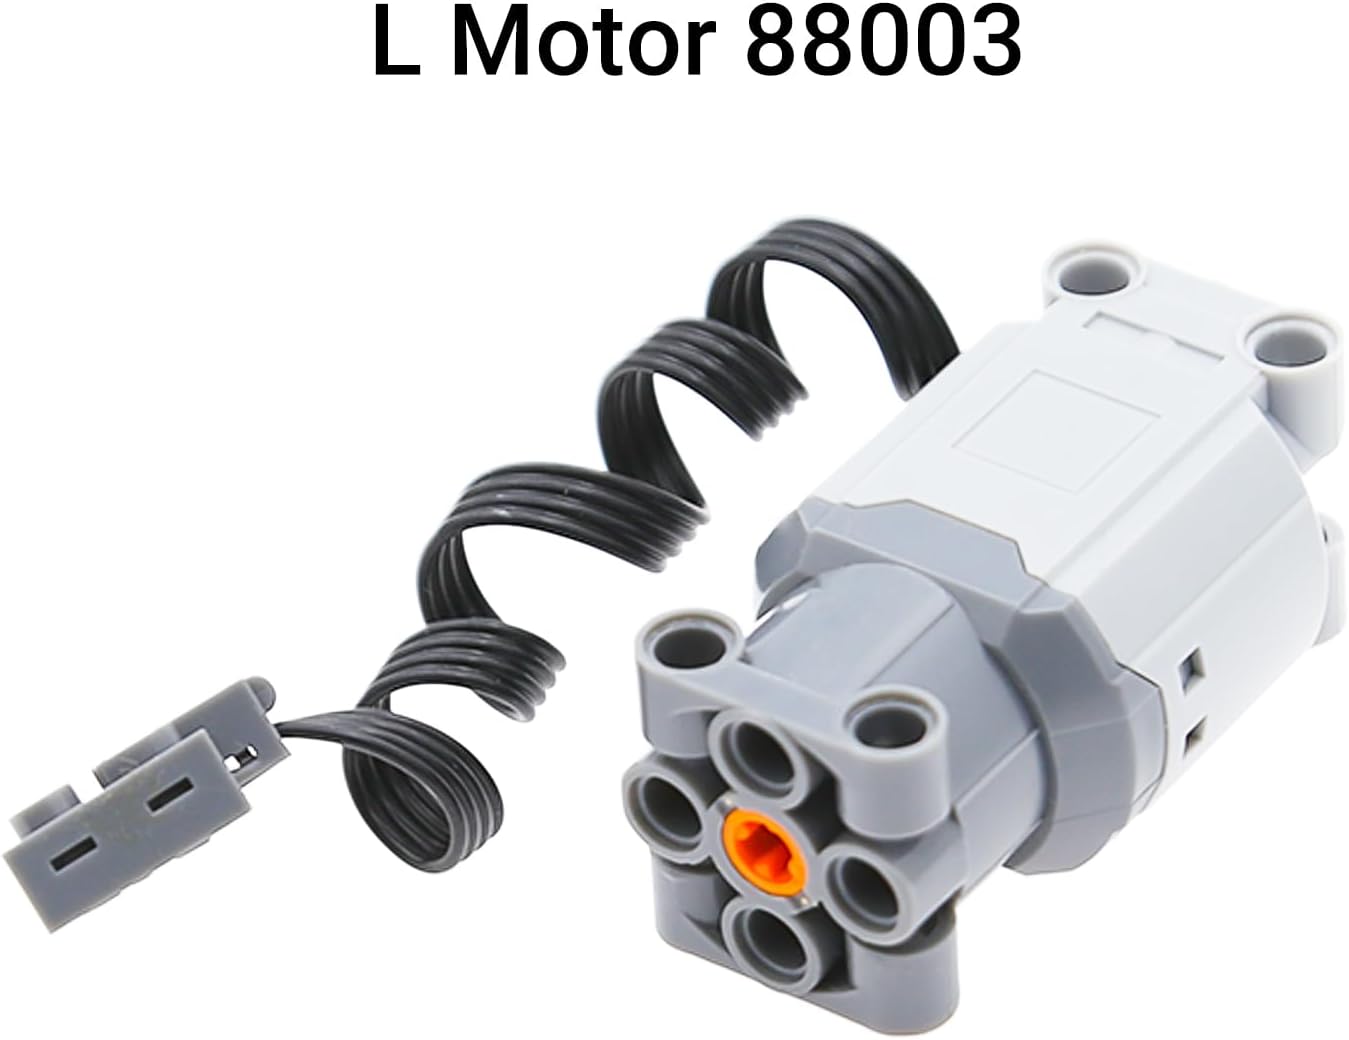 12pcs Technic-Motor Monster/XL/L/M/Train/Servo Motor, Technical-eletric-Parts for EV3 MOC.